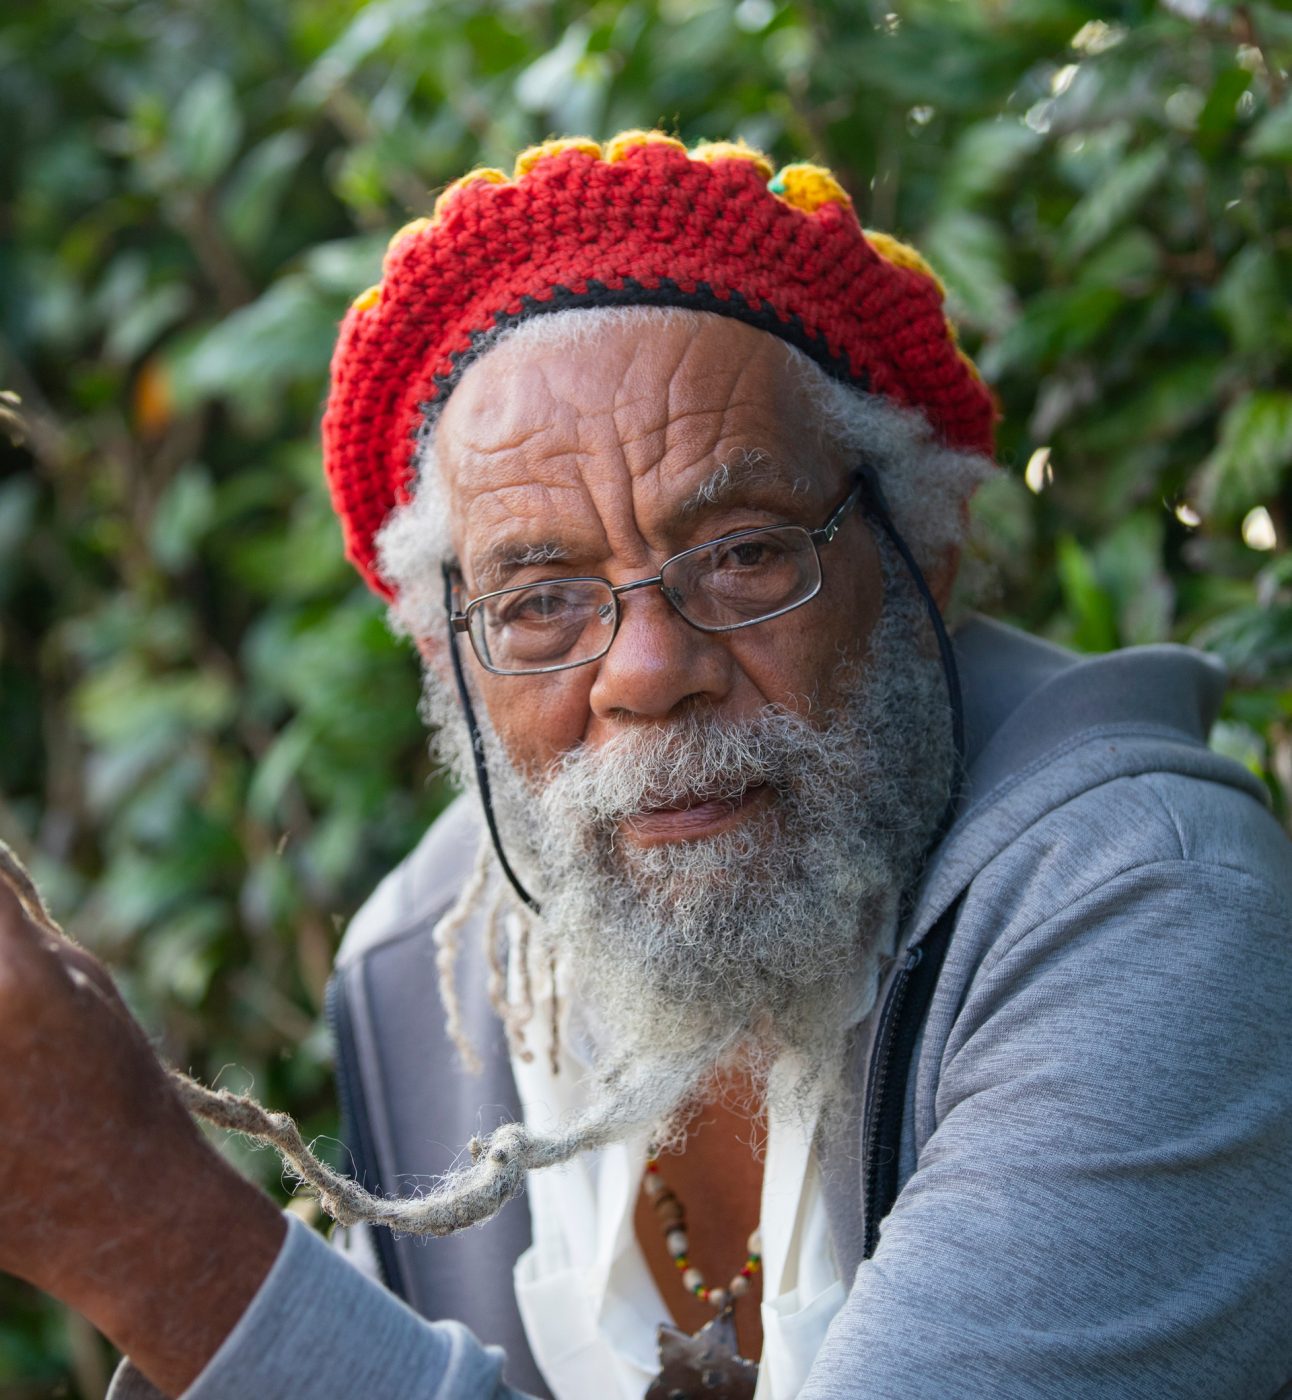 Older people in Jamaica